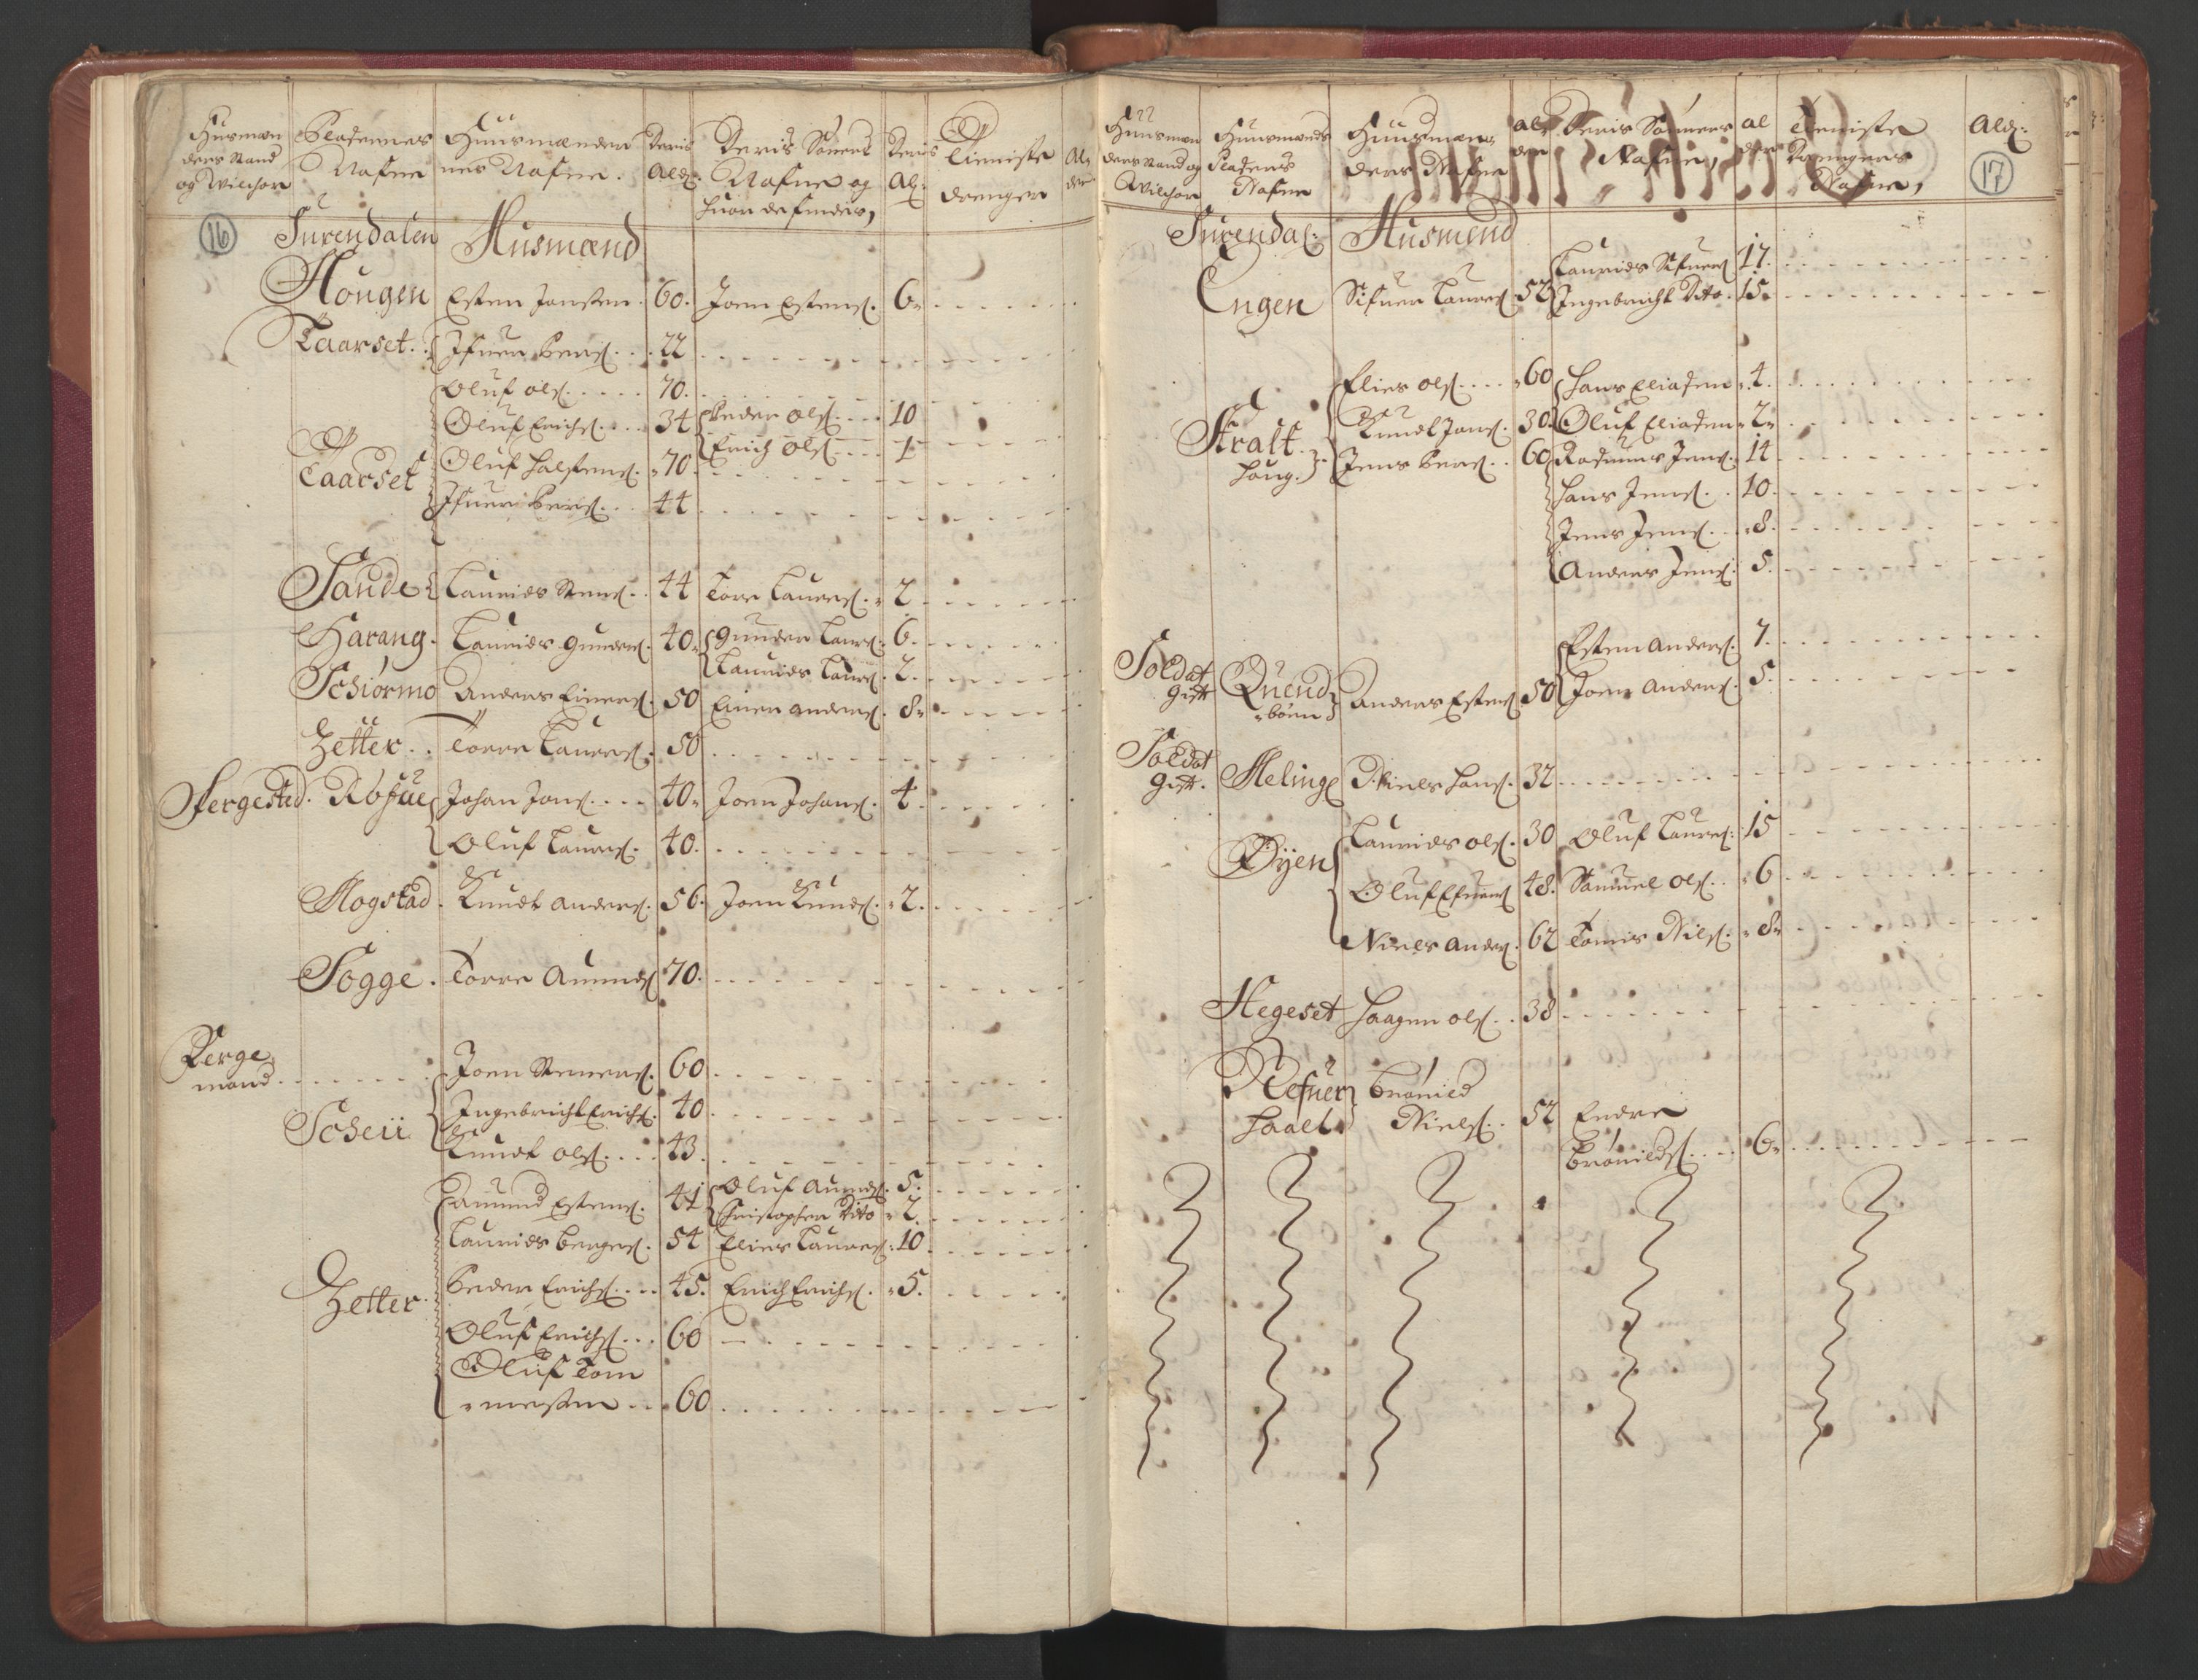 RA, Manntallet 1701, nr. 11: Nordmøre fogderi og Romsdal fogderi, 1701, s. 16-17